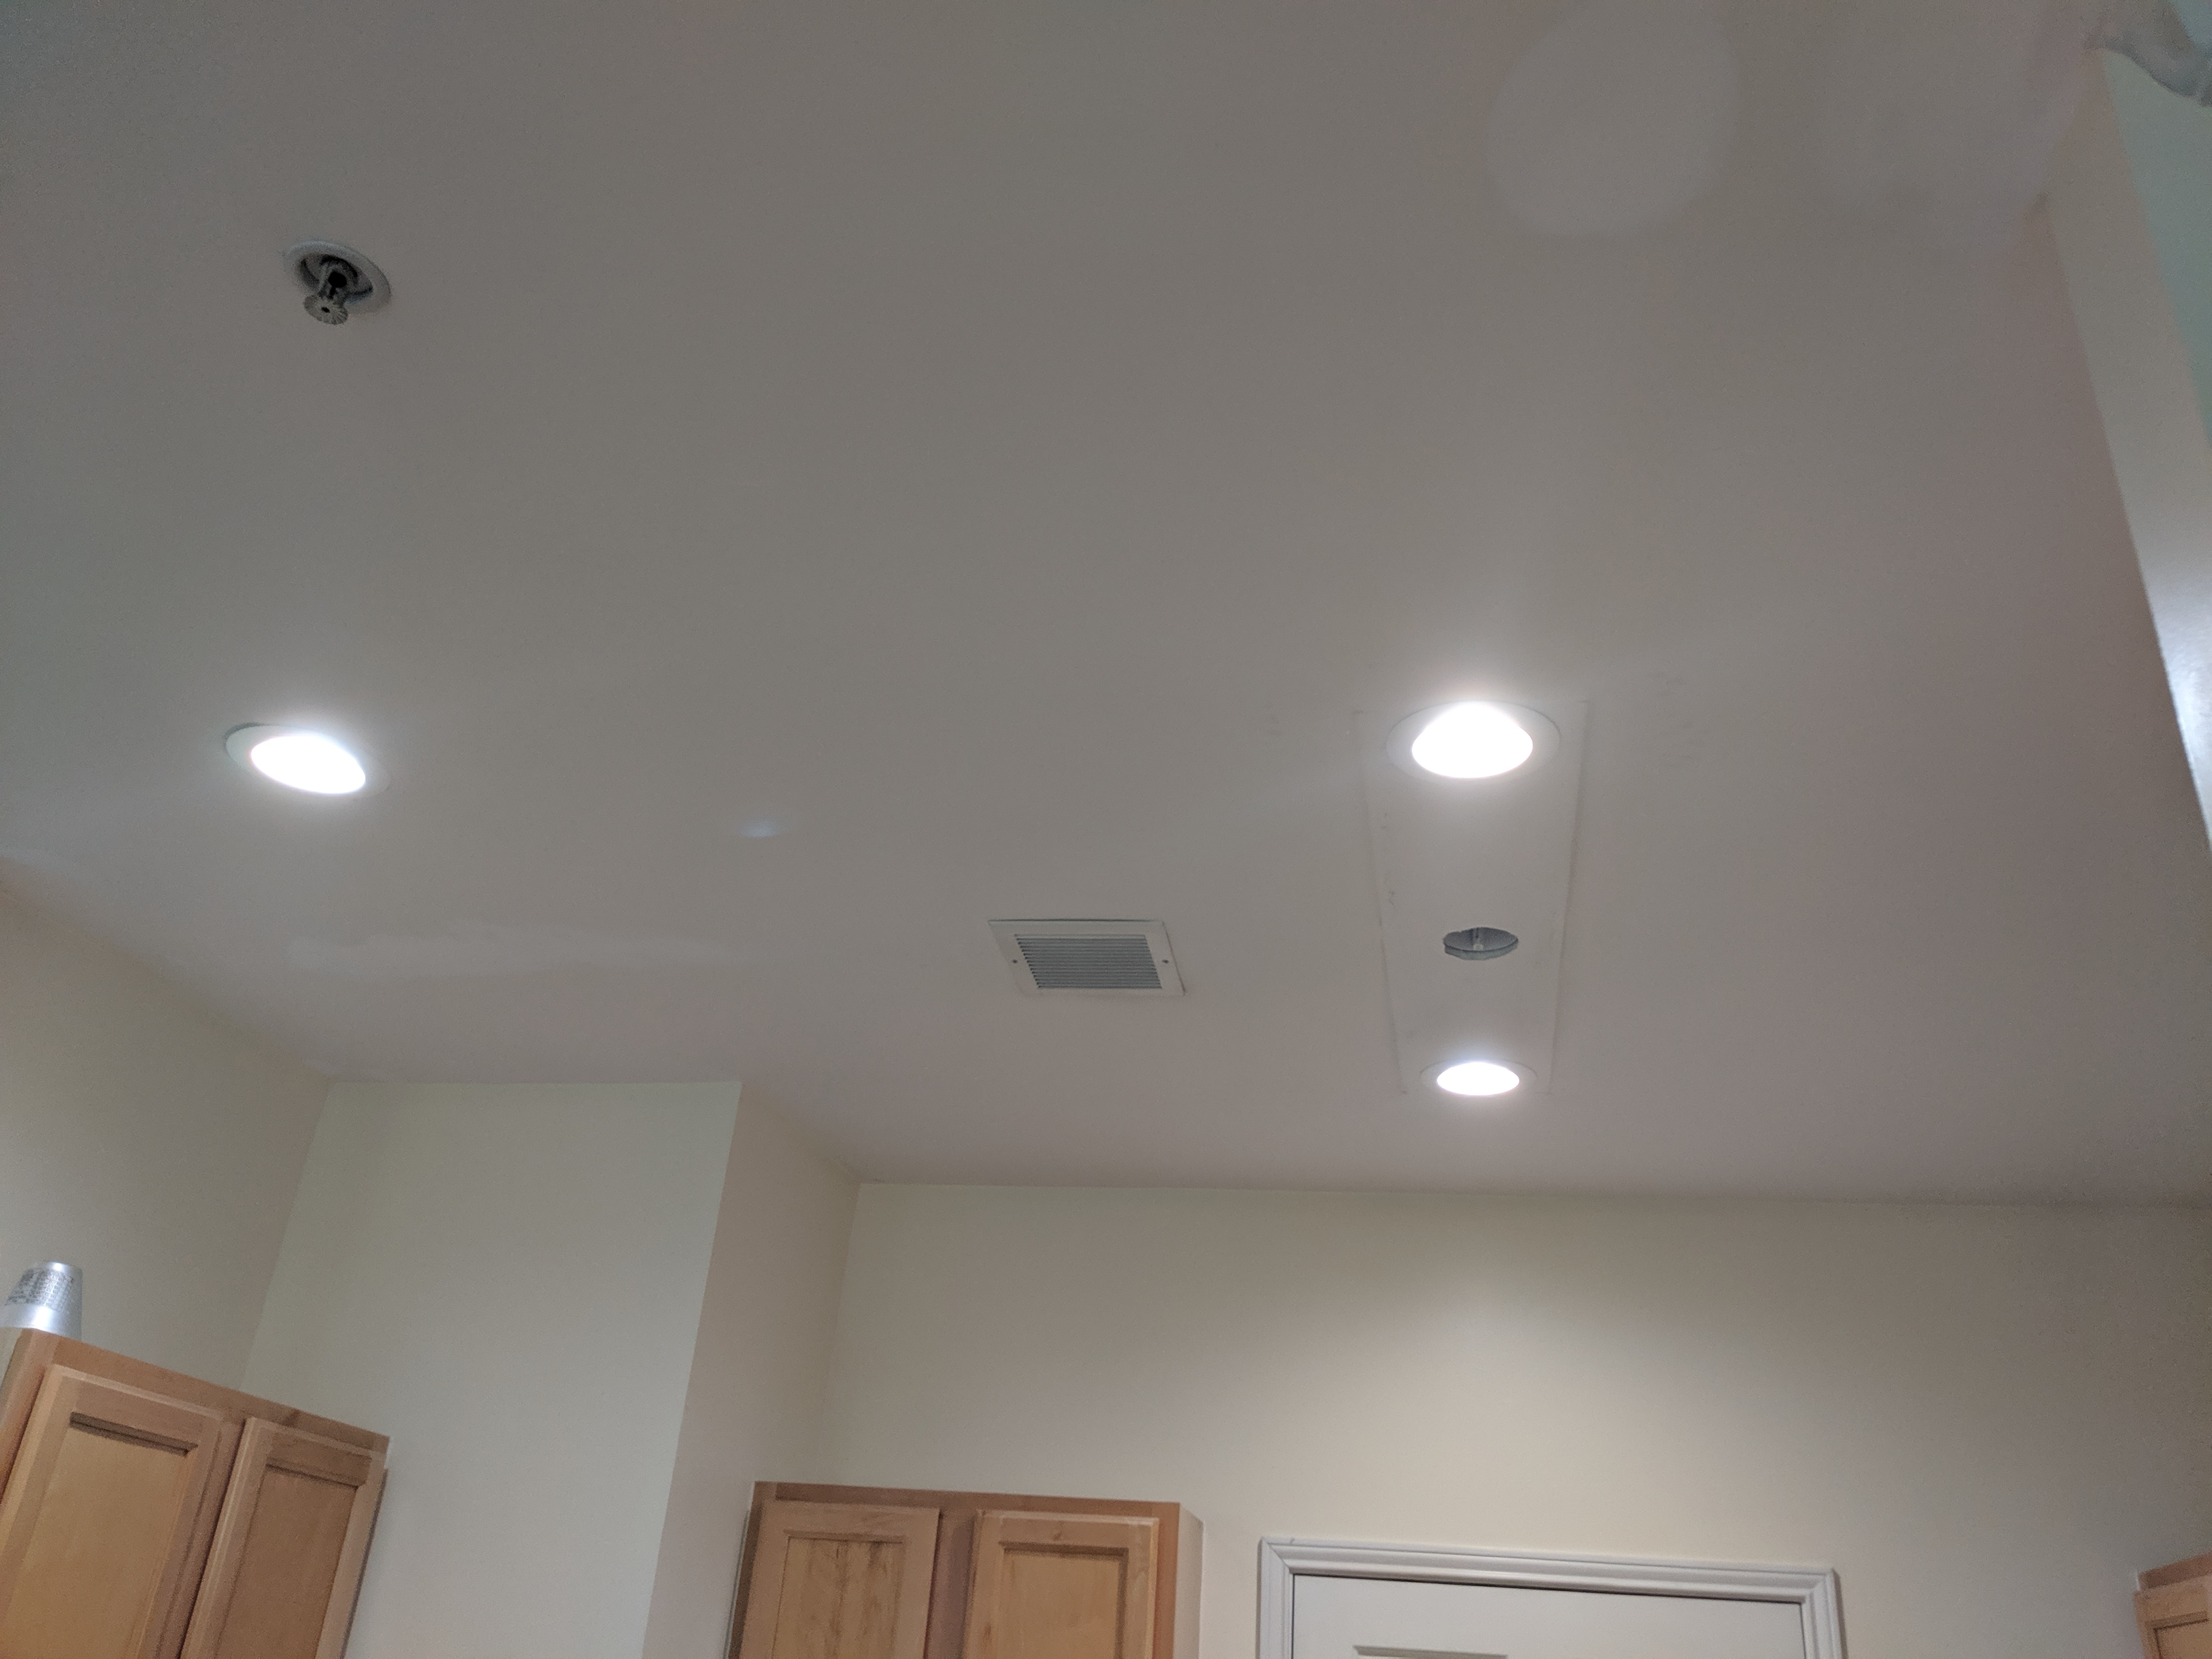 New kitchen lights